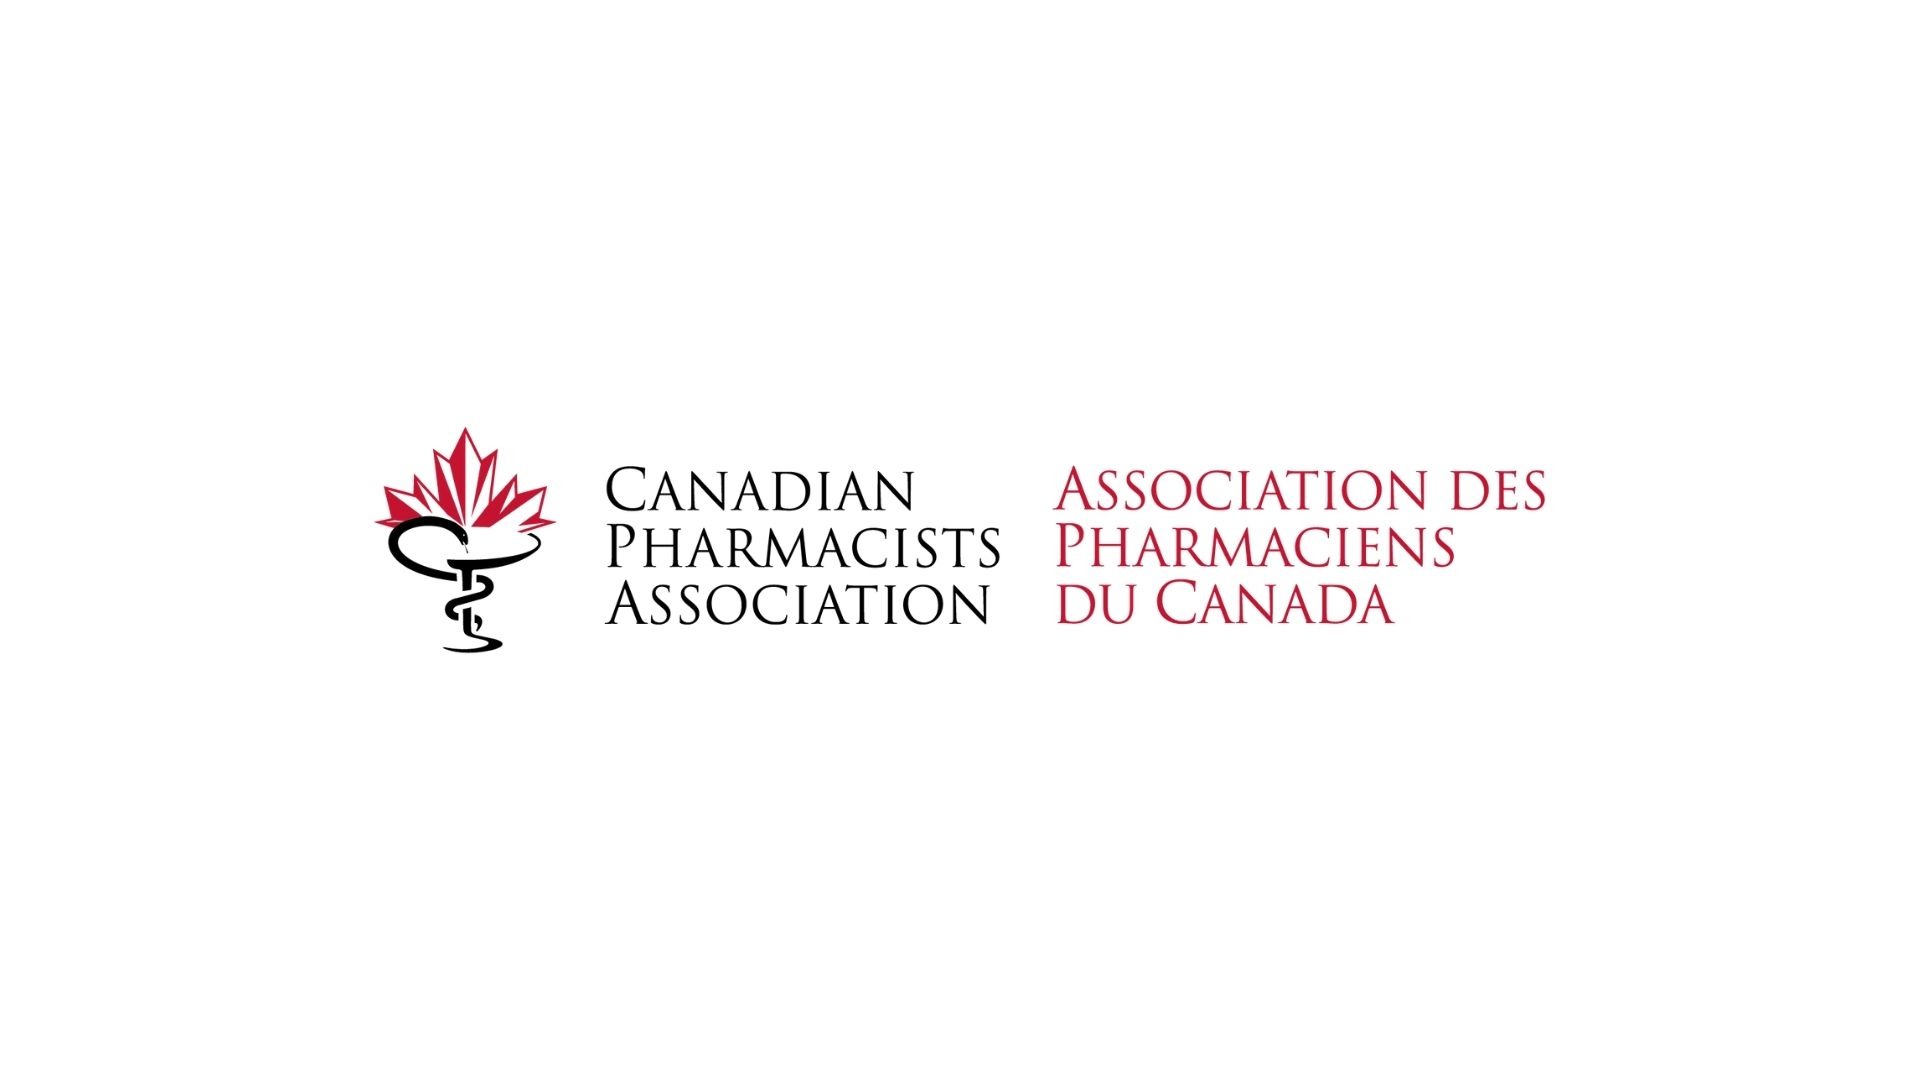 Canadian Pharmacists Association Benefits